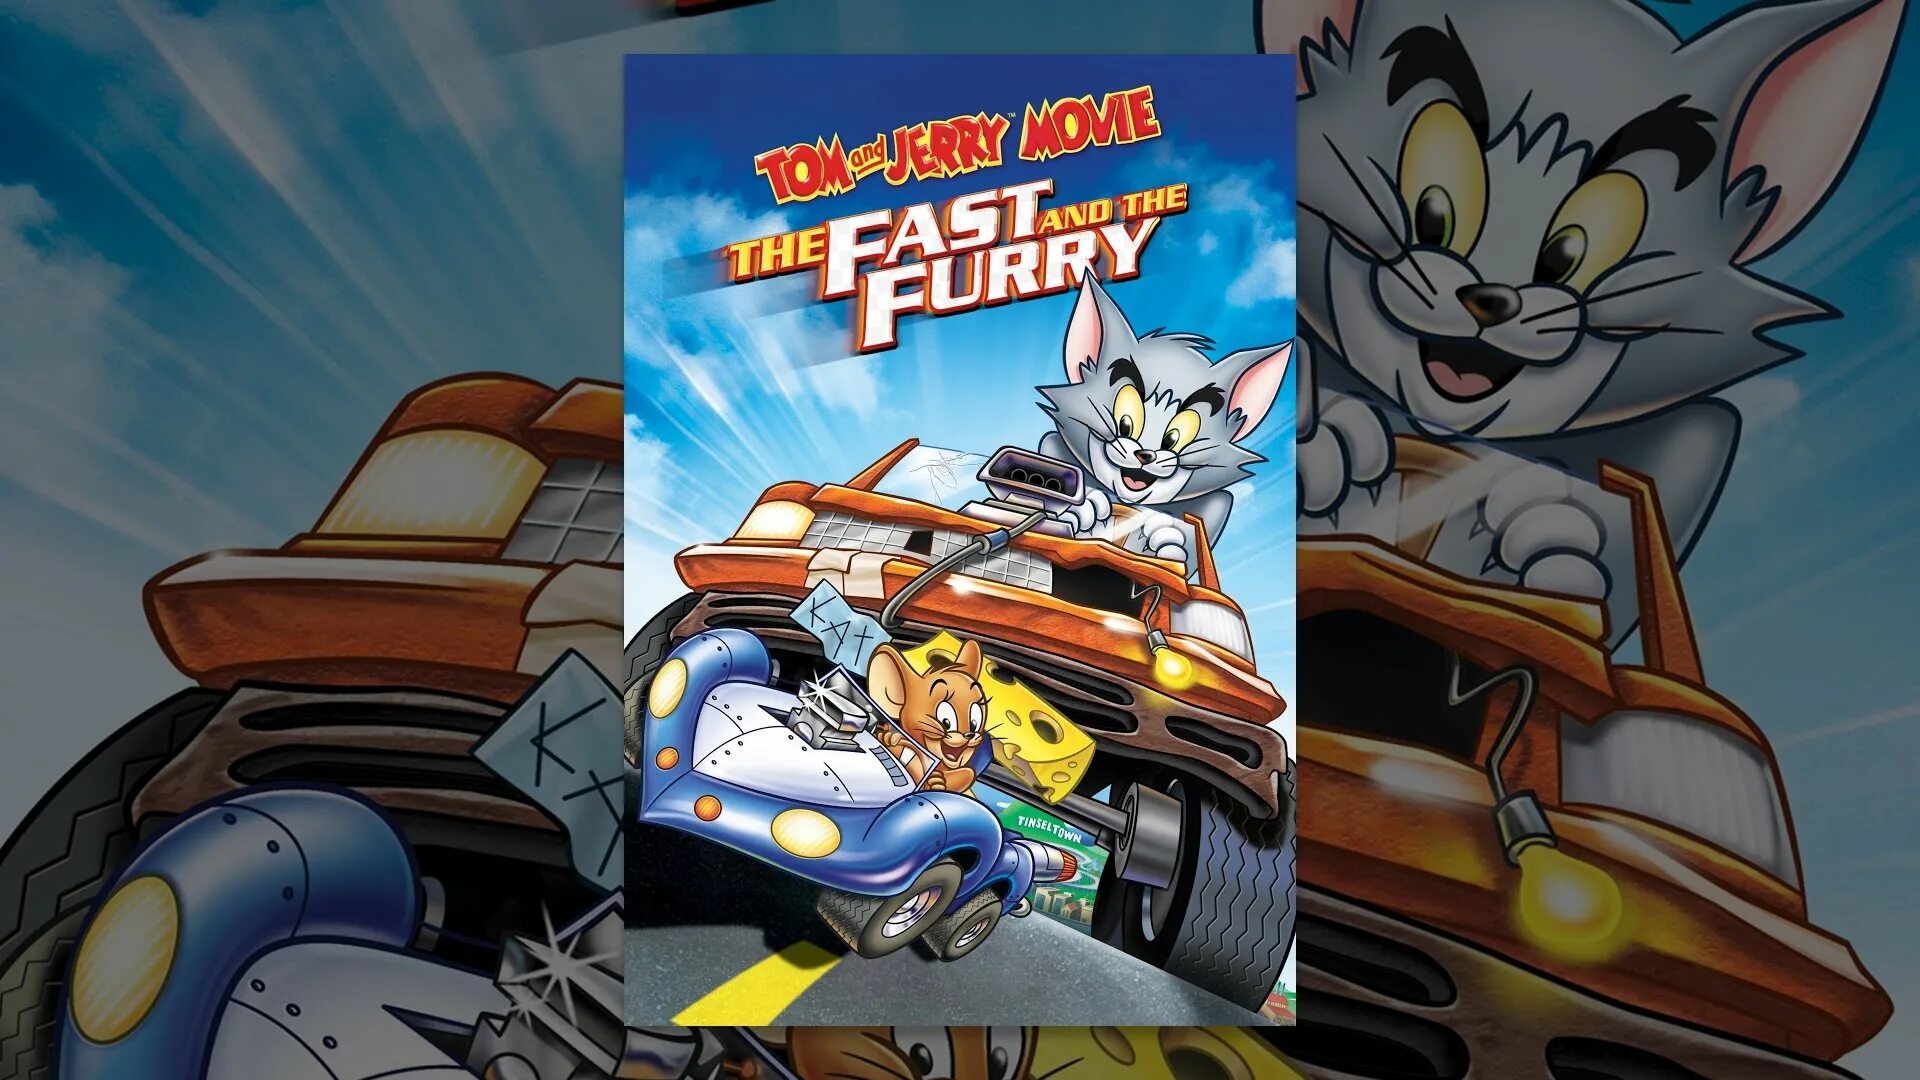 Tom and Jerry fast and furry. Том и Джерри быстрый и пушистый. Том и Джерри: быстрый и бешеный DVD.